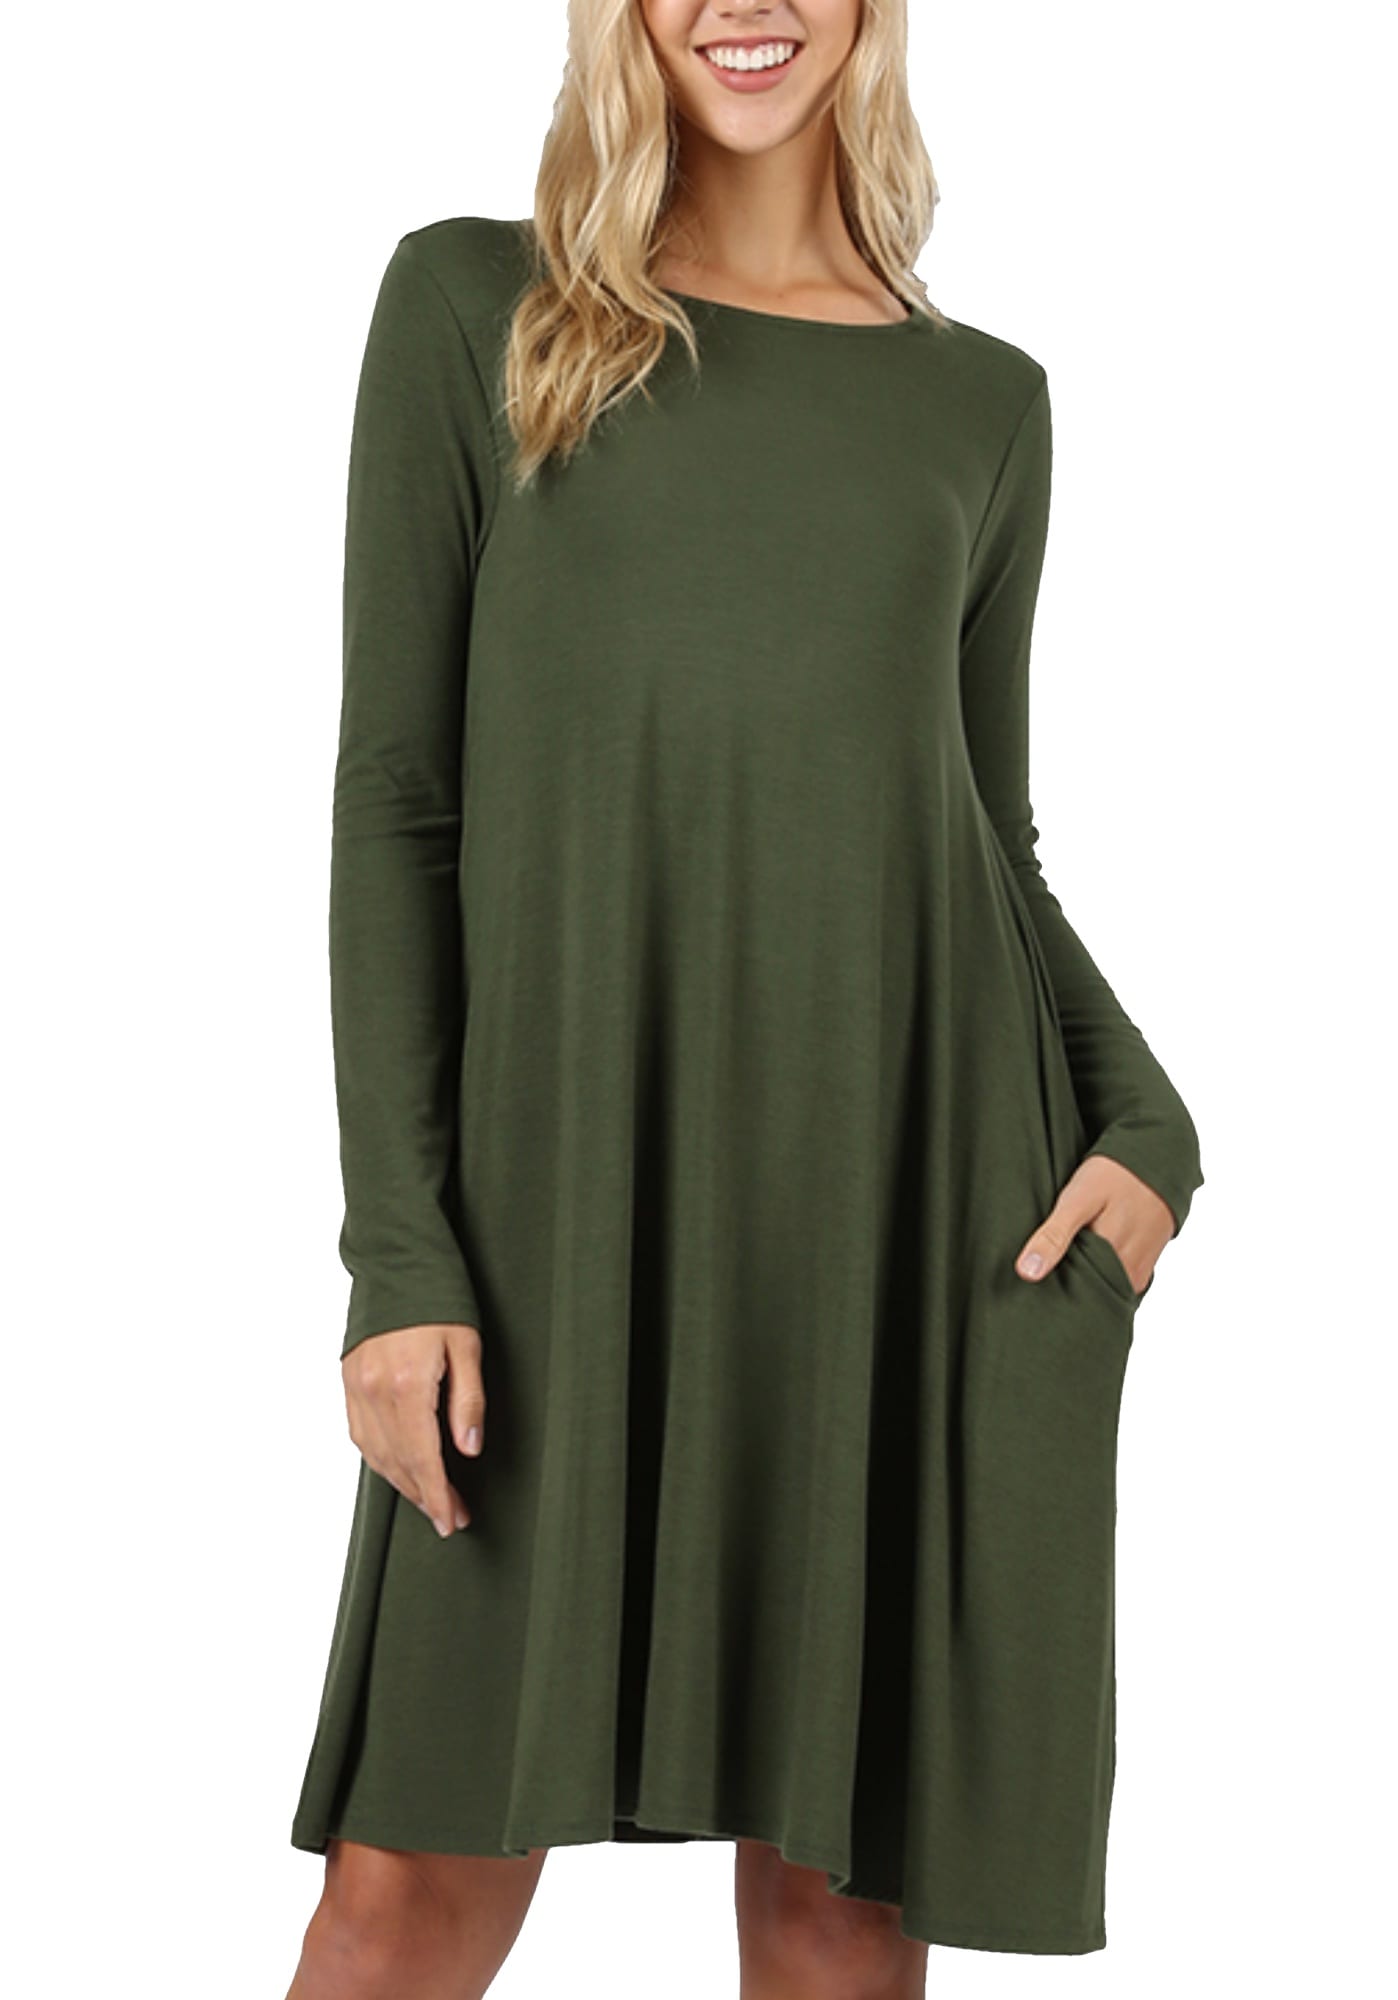 Premium Long Sleeve Flare Dress W/ Pockets - $0.00 - KoaJoa.com